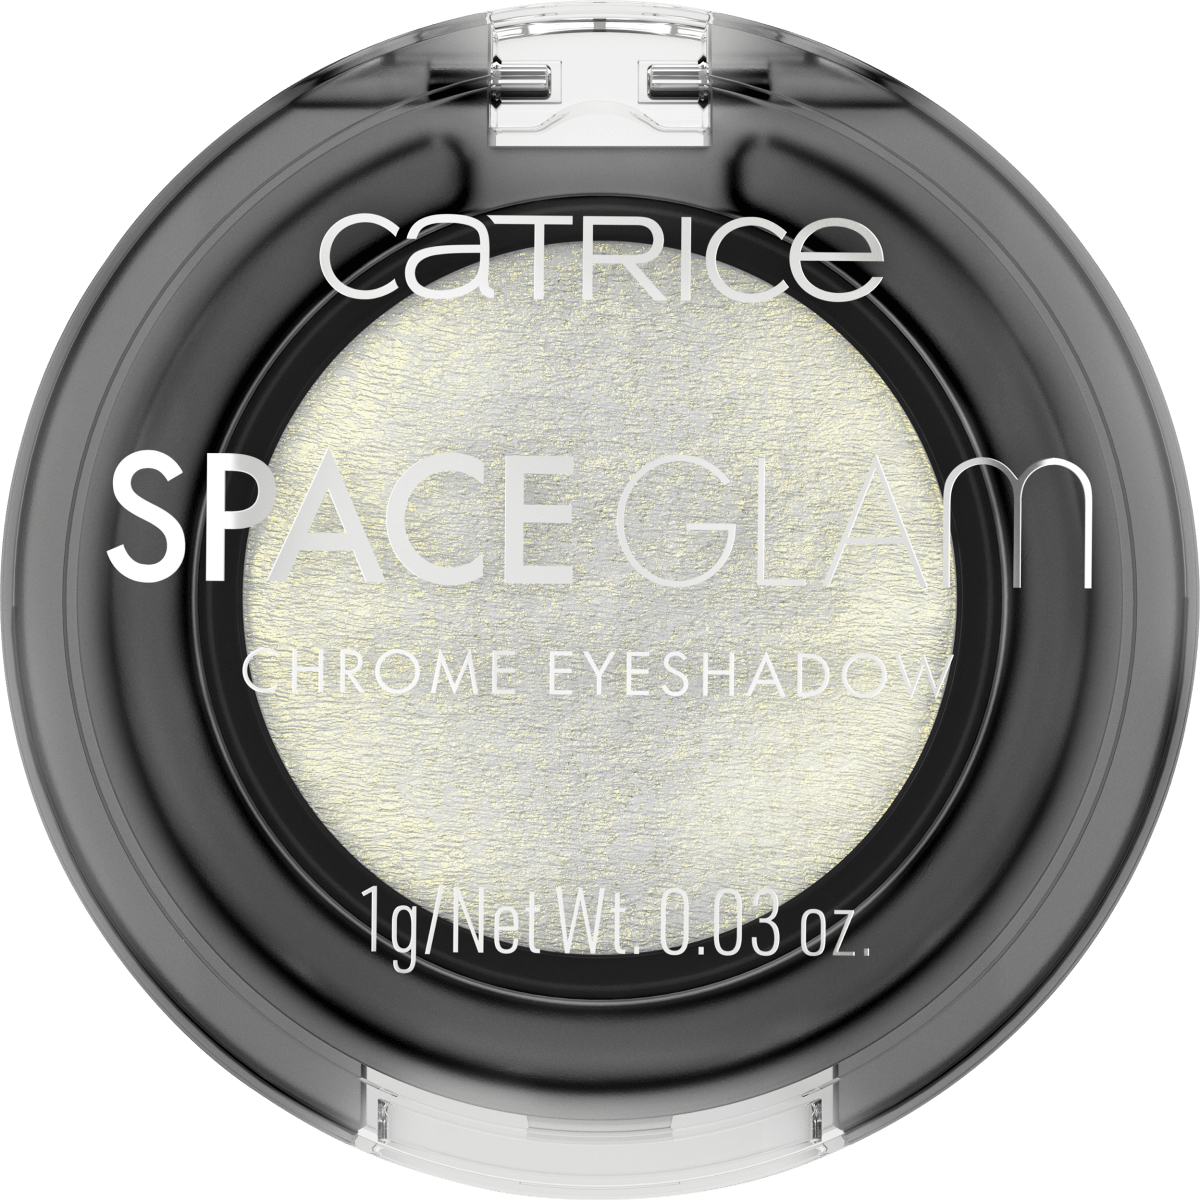 Крышка Space Glam Chrome 010 Moonlight Glow 1 г Catrice